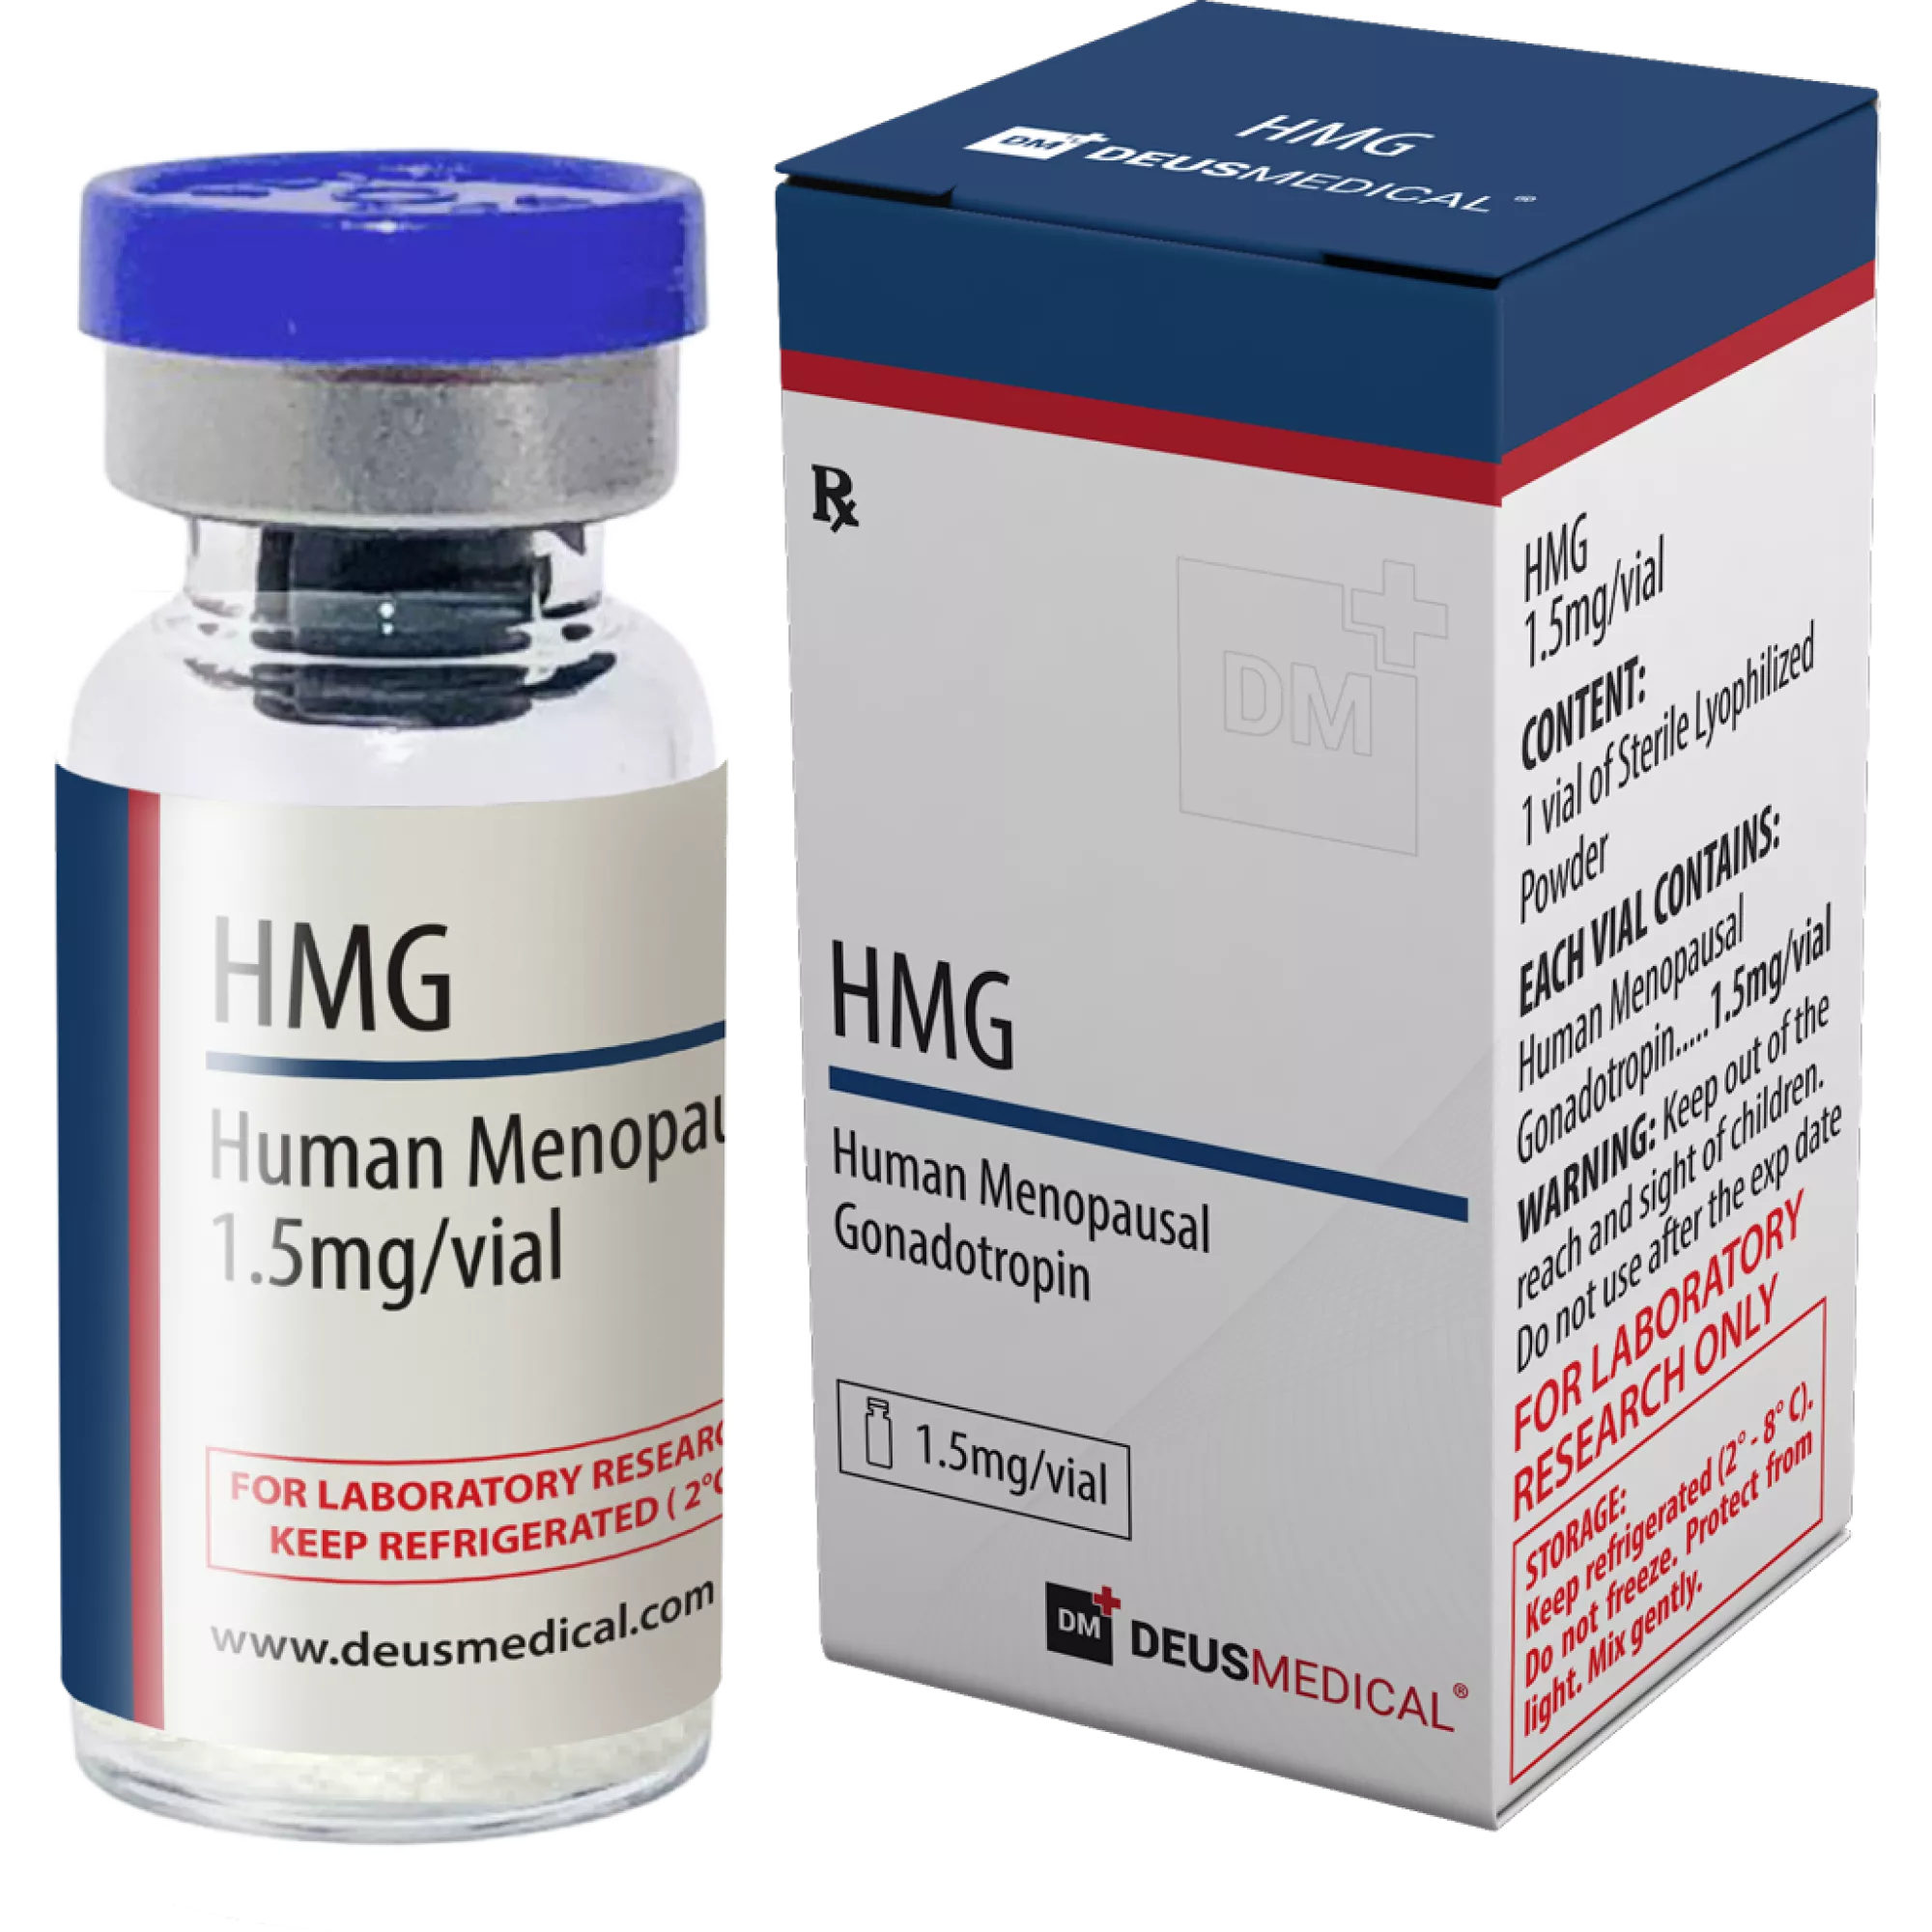 HMG (Human Menopausal Gonadotropin), Deus Medical, Buy Steroids Online - www.deuspower.shop